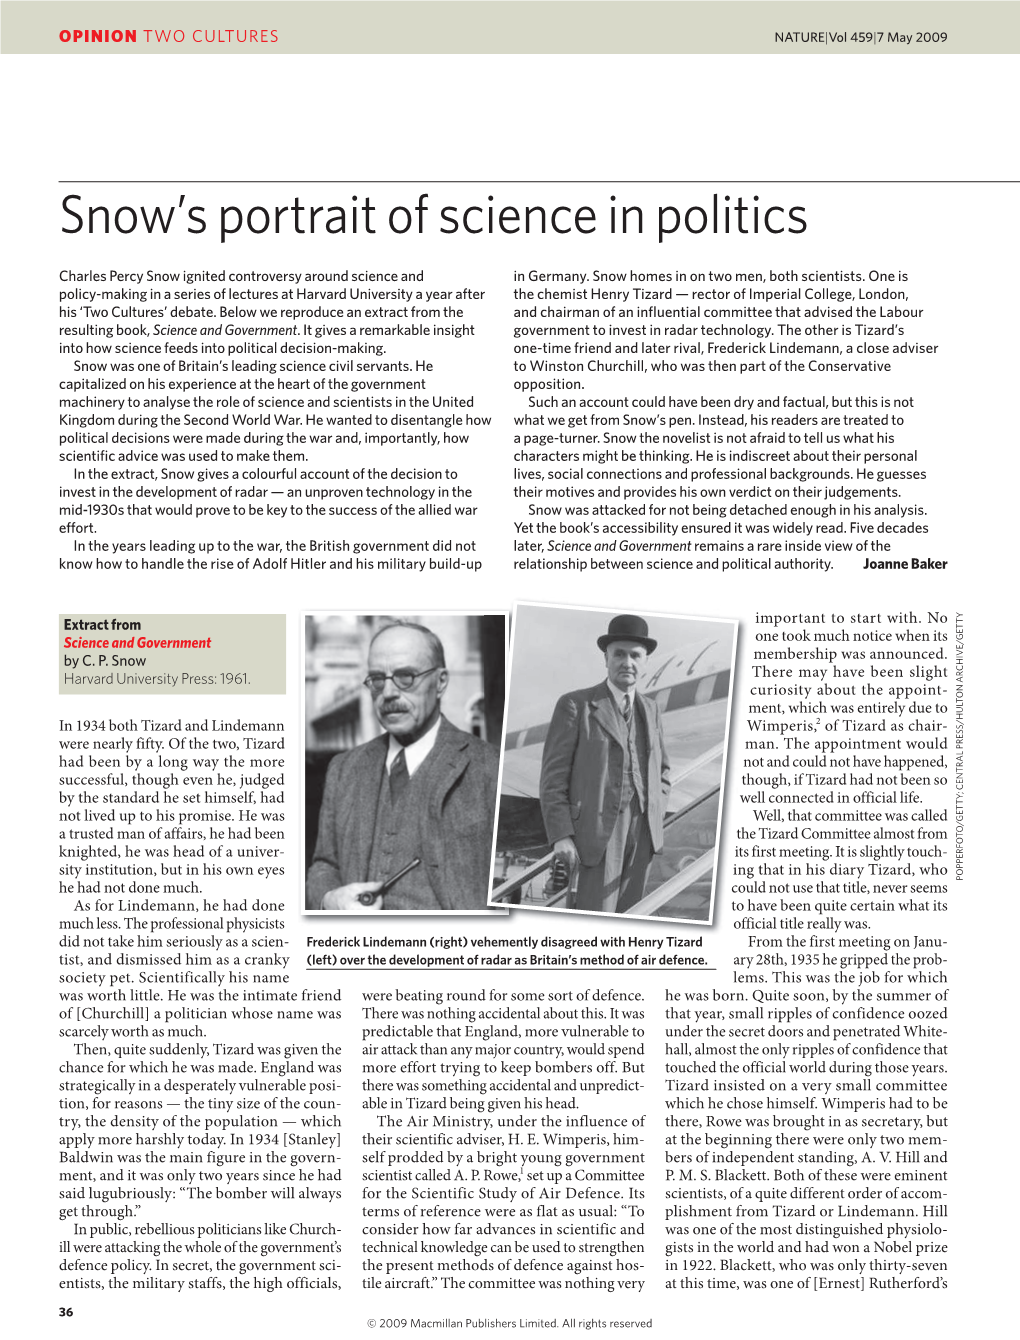 Snow's Portrait of Science in Politics